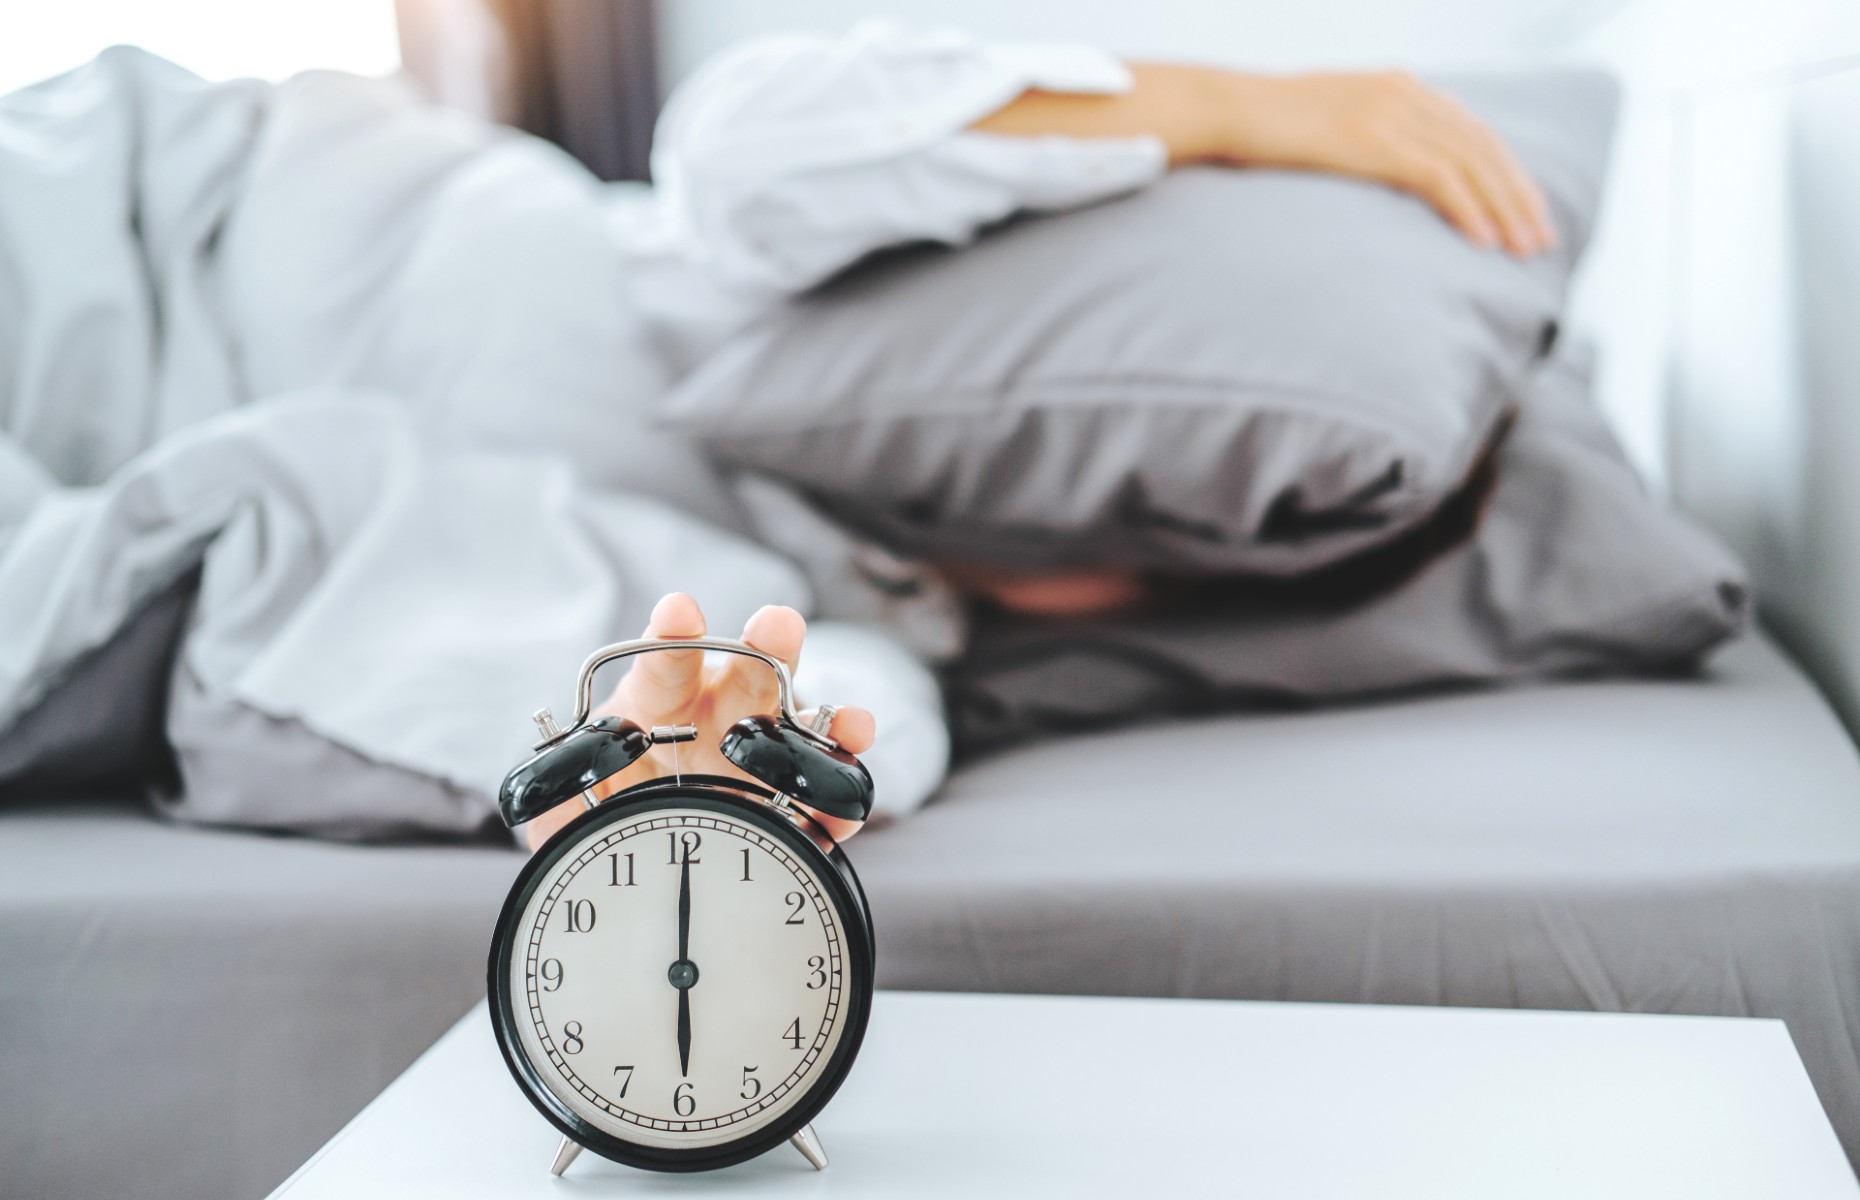 Alarm clock in hotel room (Image: Joyseulay/Shutterstock)